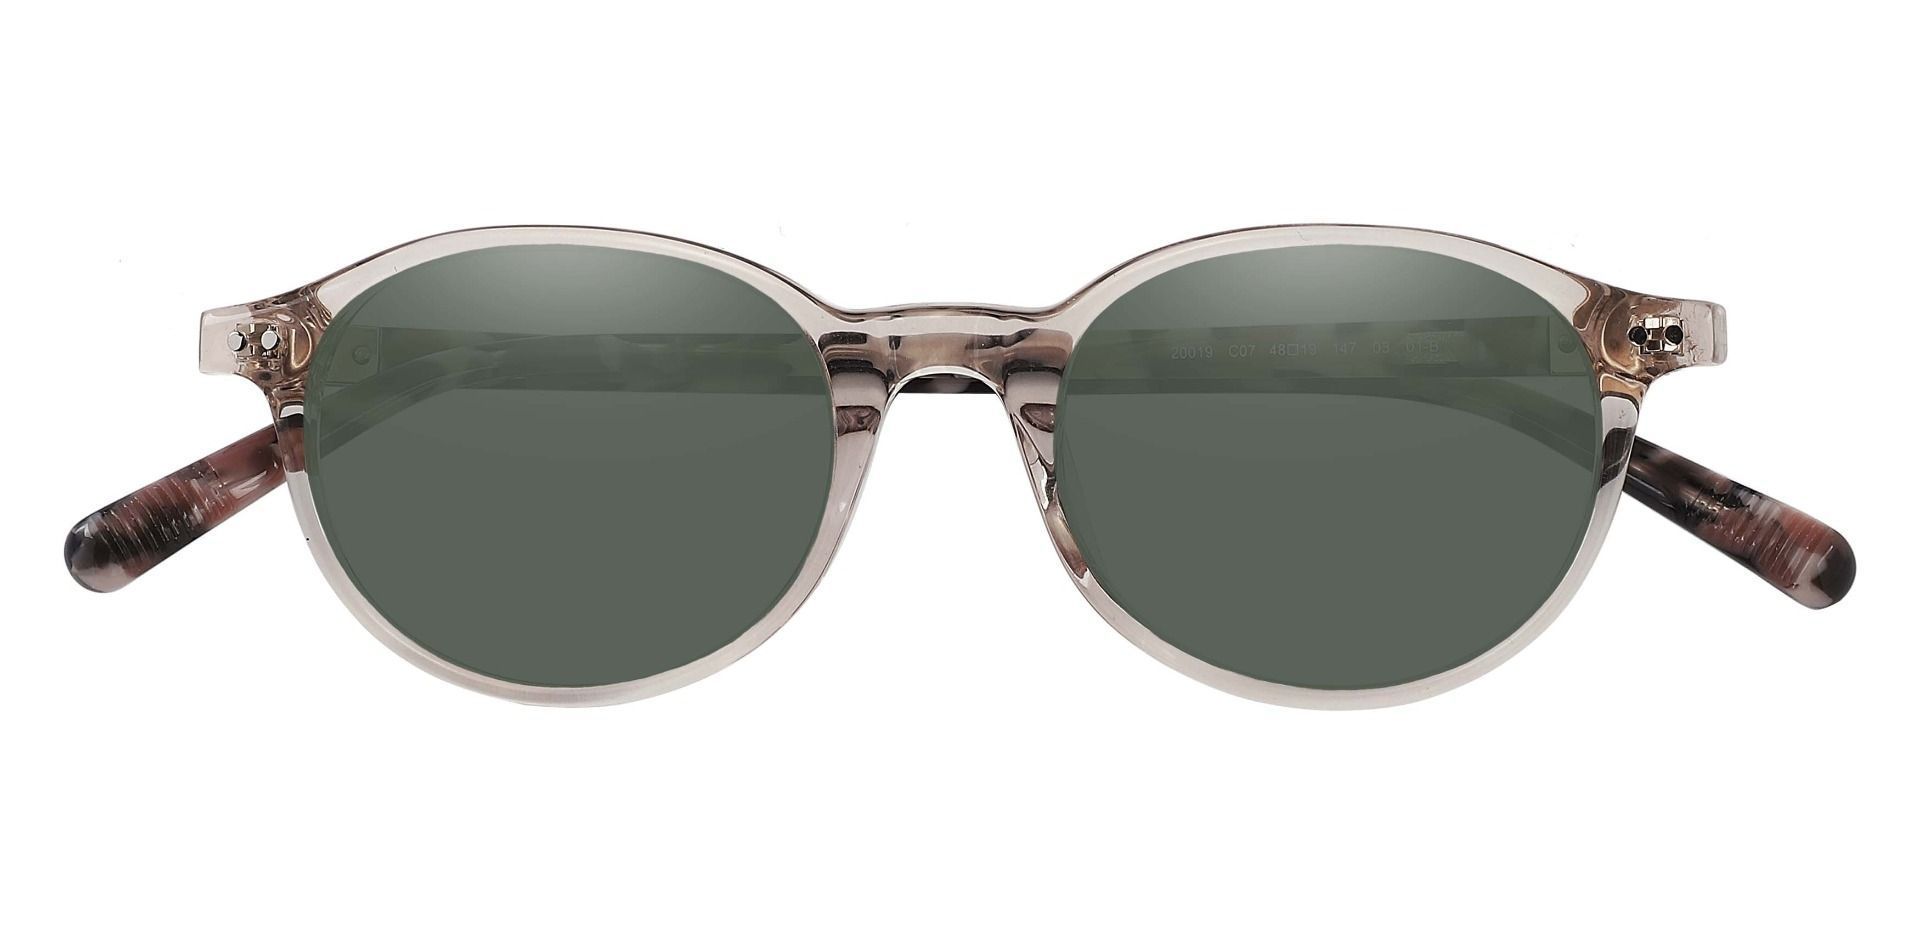 Avon Oval Progressive Sunglasses - Clear Frame With Green Lenses